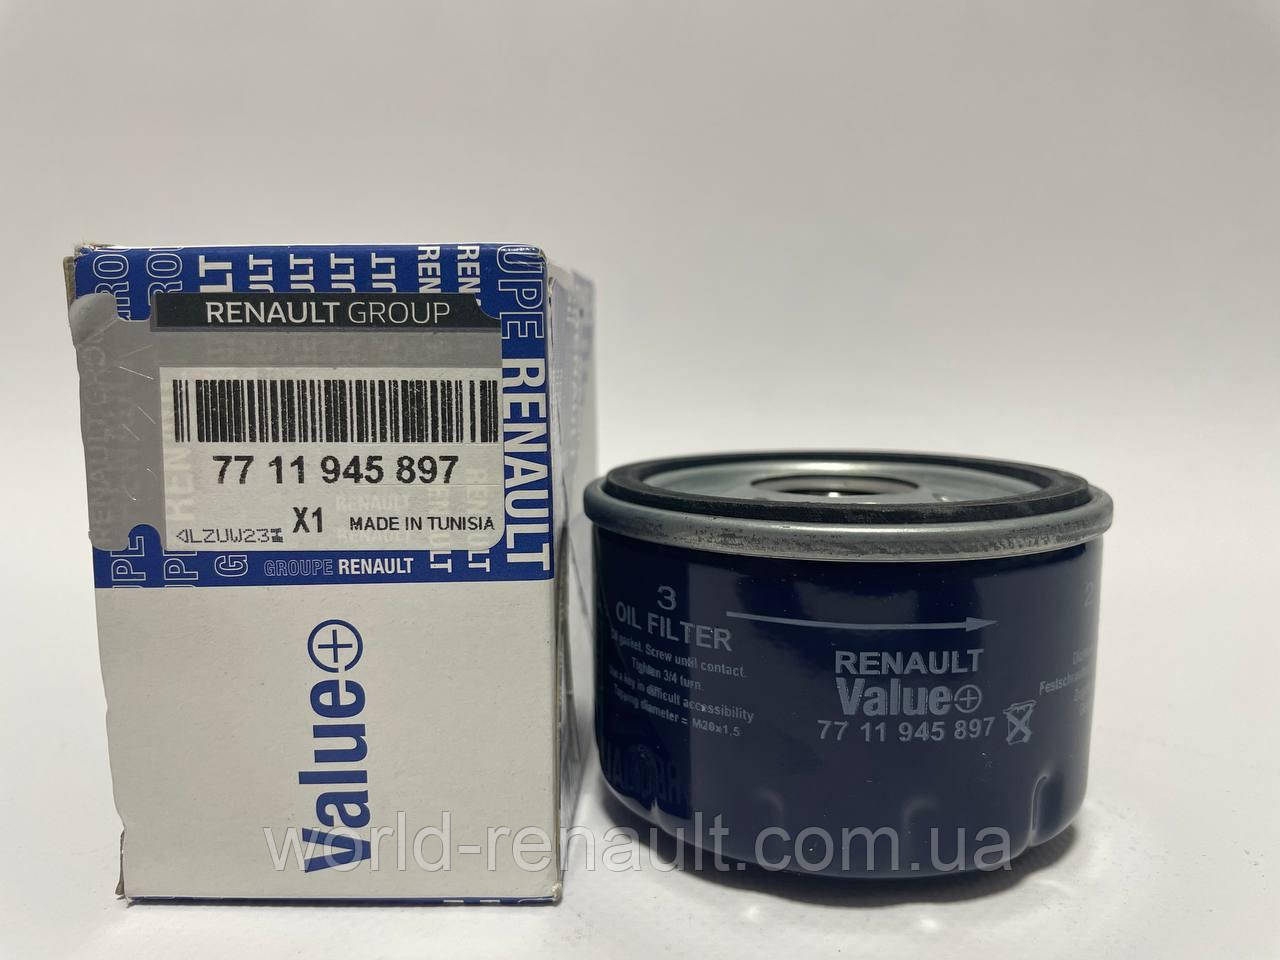 Value + (Renault) 7711945897 — Оливний фільтр на Рено Лагуна III 1.6i 16V K4M